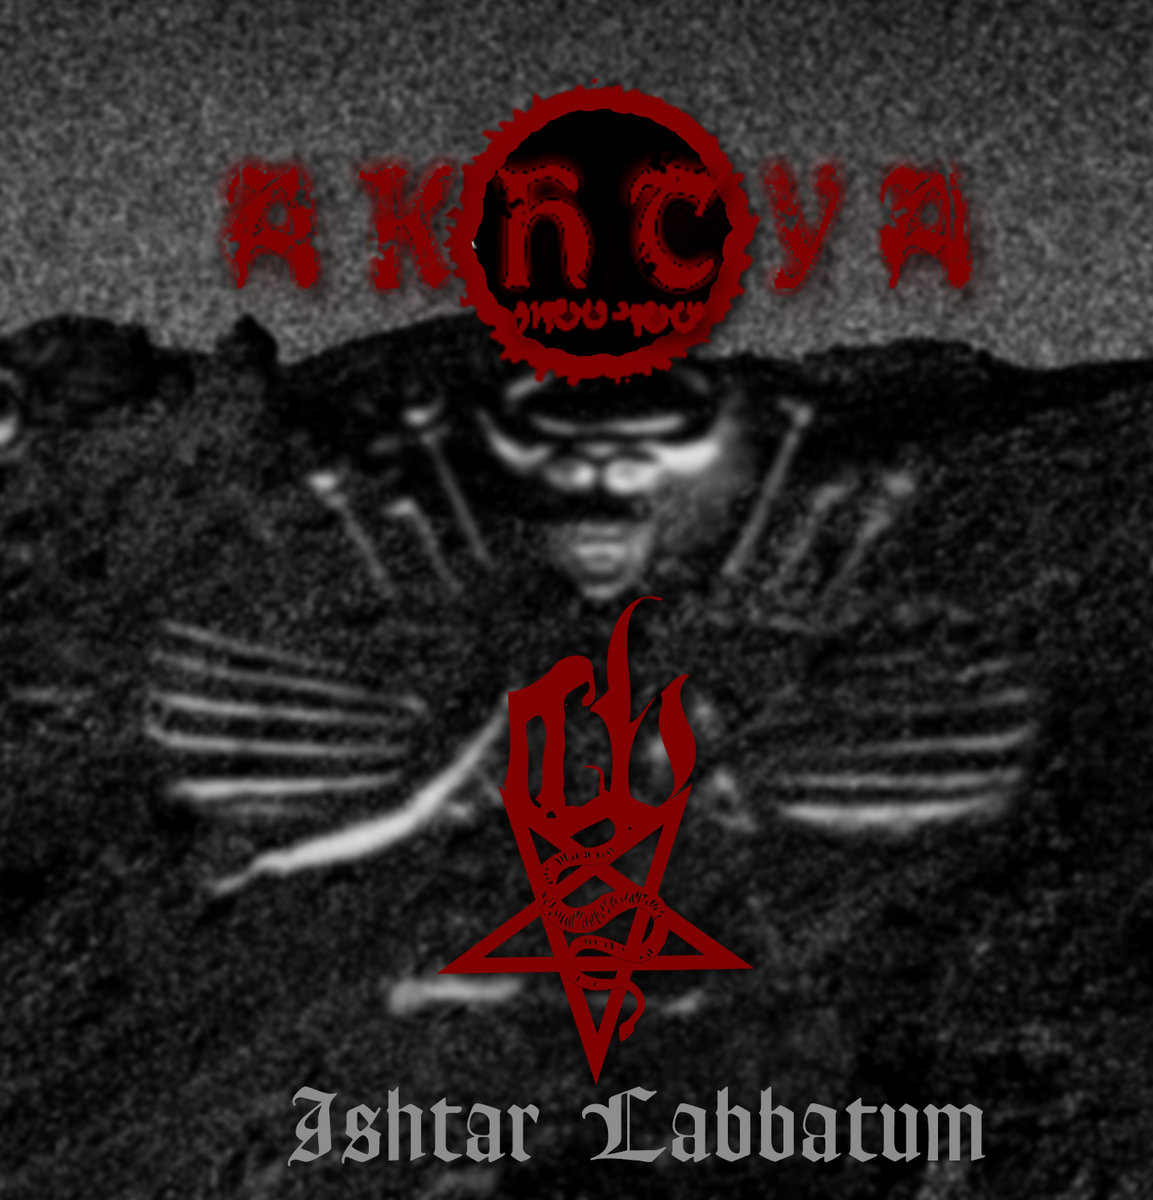 Akhtya--Ishtar Labbatum Feat. Corona Barathri-16B-44k-WEB-FLAC-2020-ORDER Download